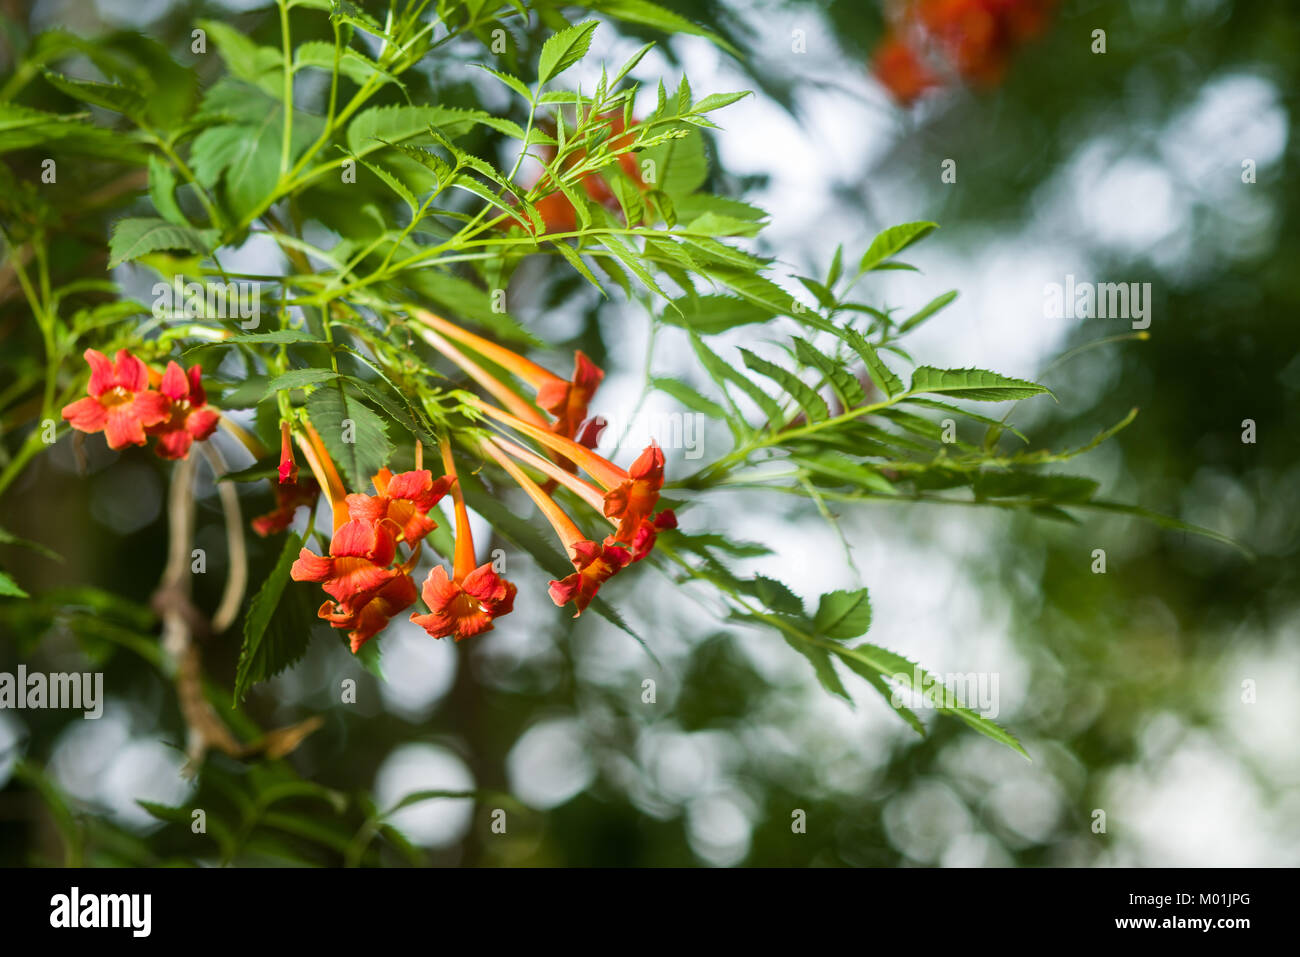 Orange trumpet creeper or trumpet vine (Campsis radicans, Bignonia radicans, Tecoma radicans) showing flowers and leaves, Kenya, East Africa Stock Photo